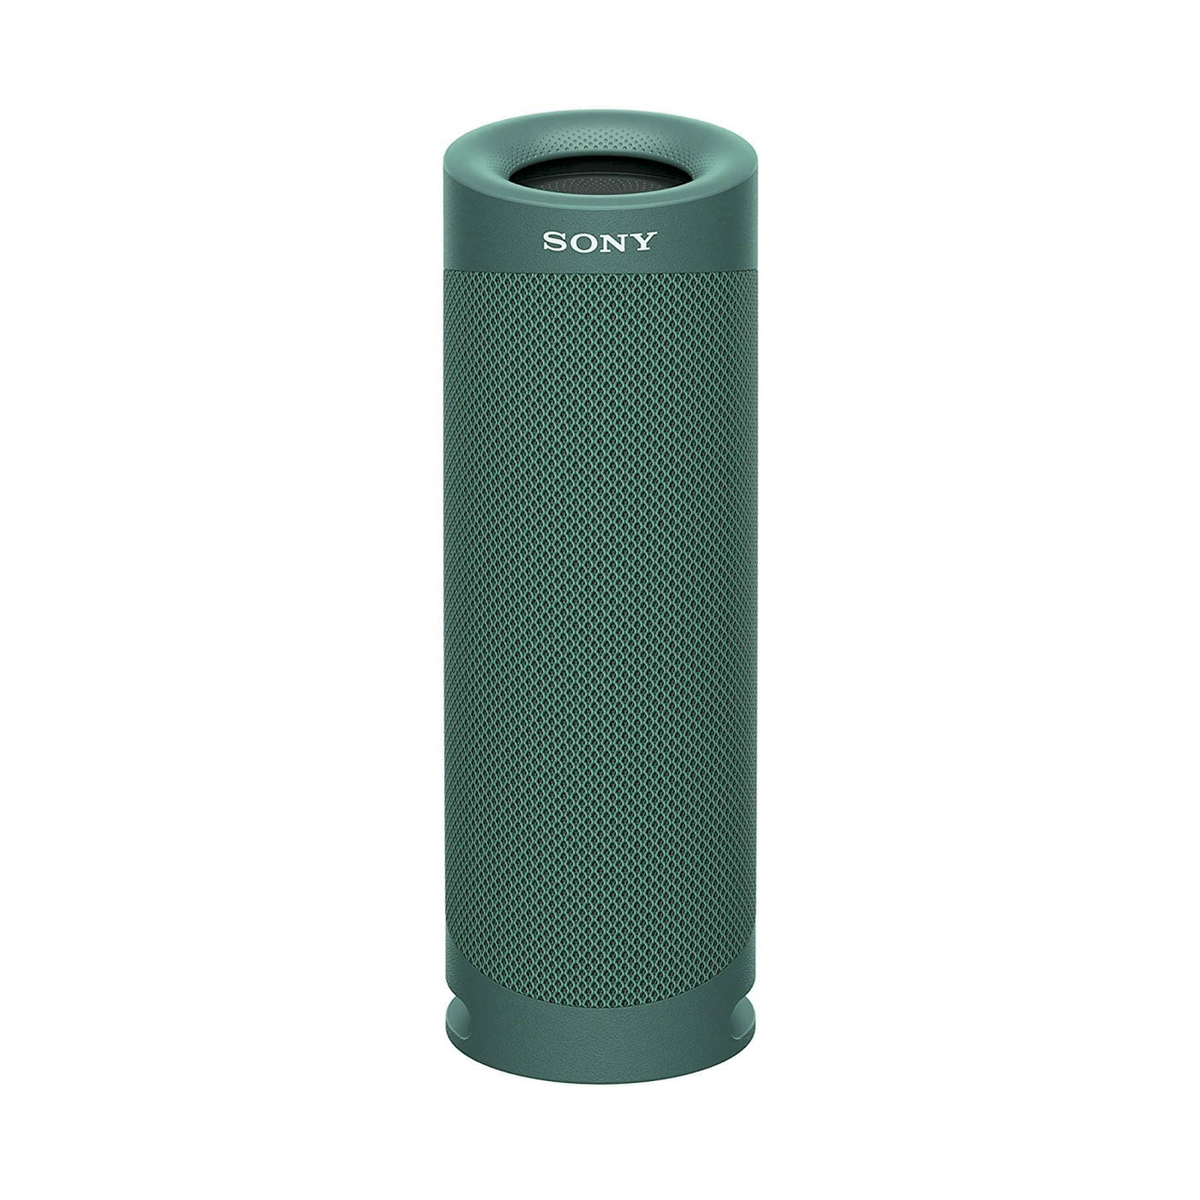 Sony SRS-XB23 Extra Bass Portable Wireless Bluetooth Speaker Olive Green